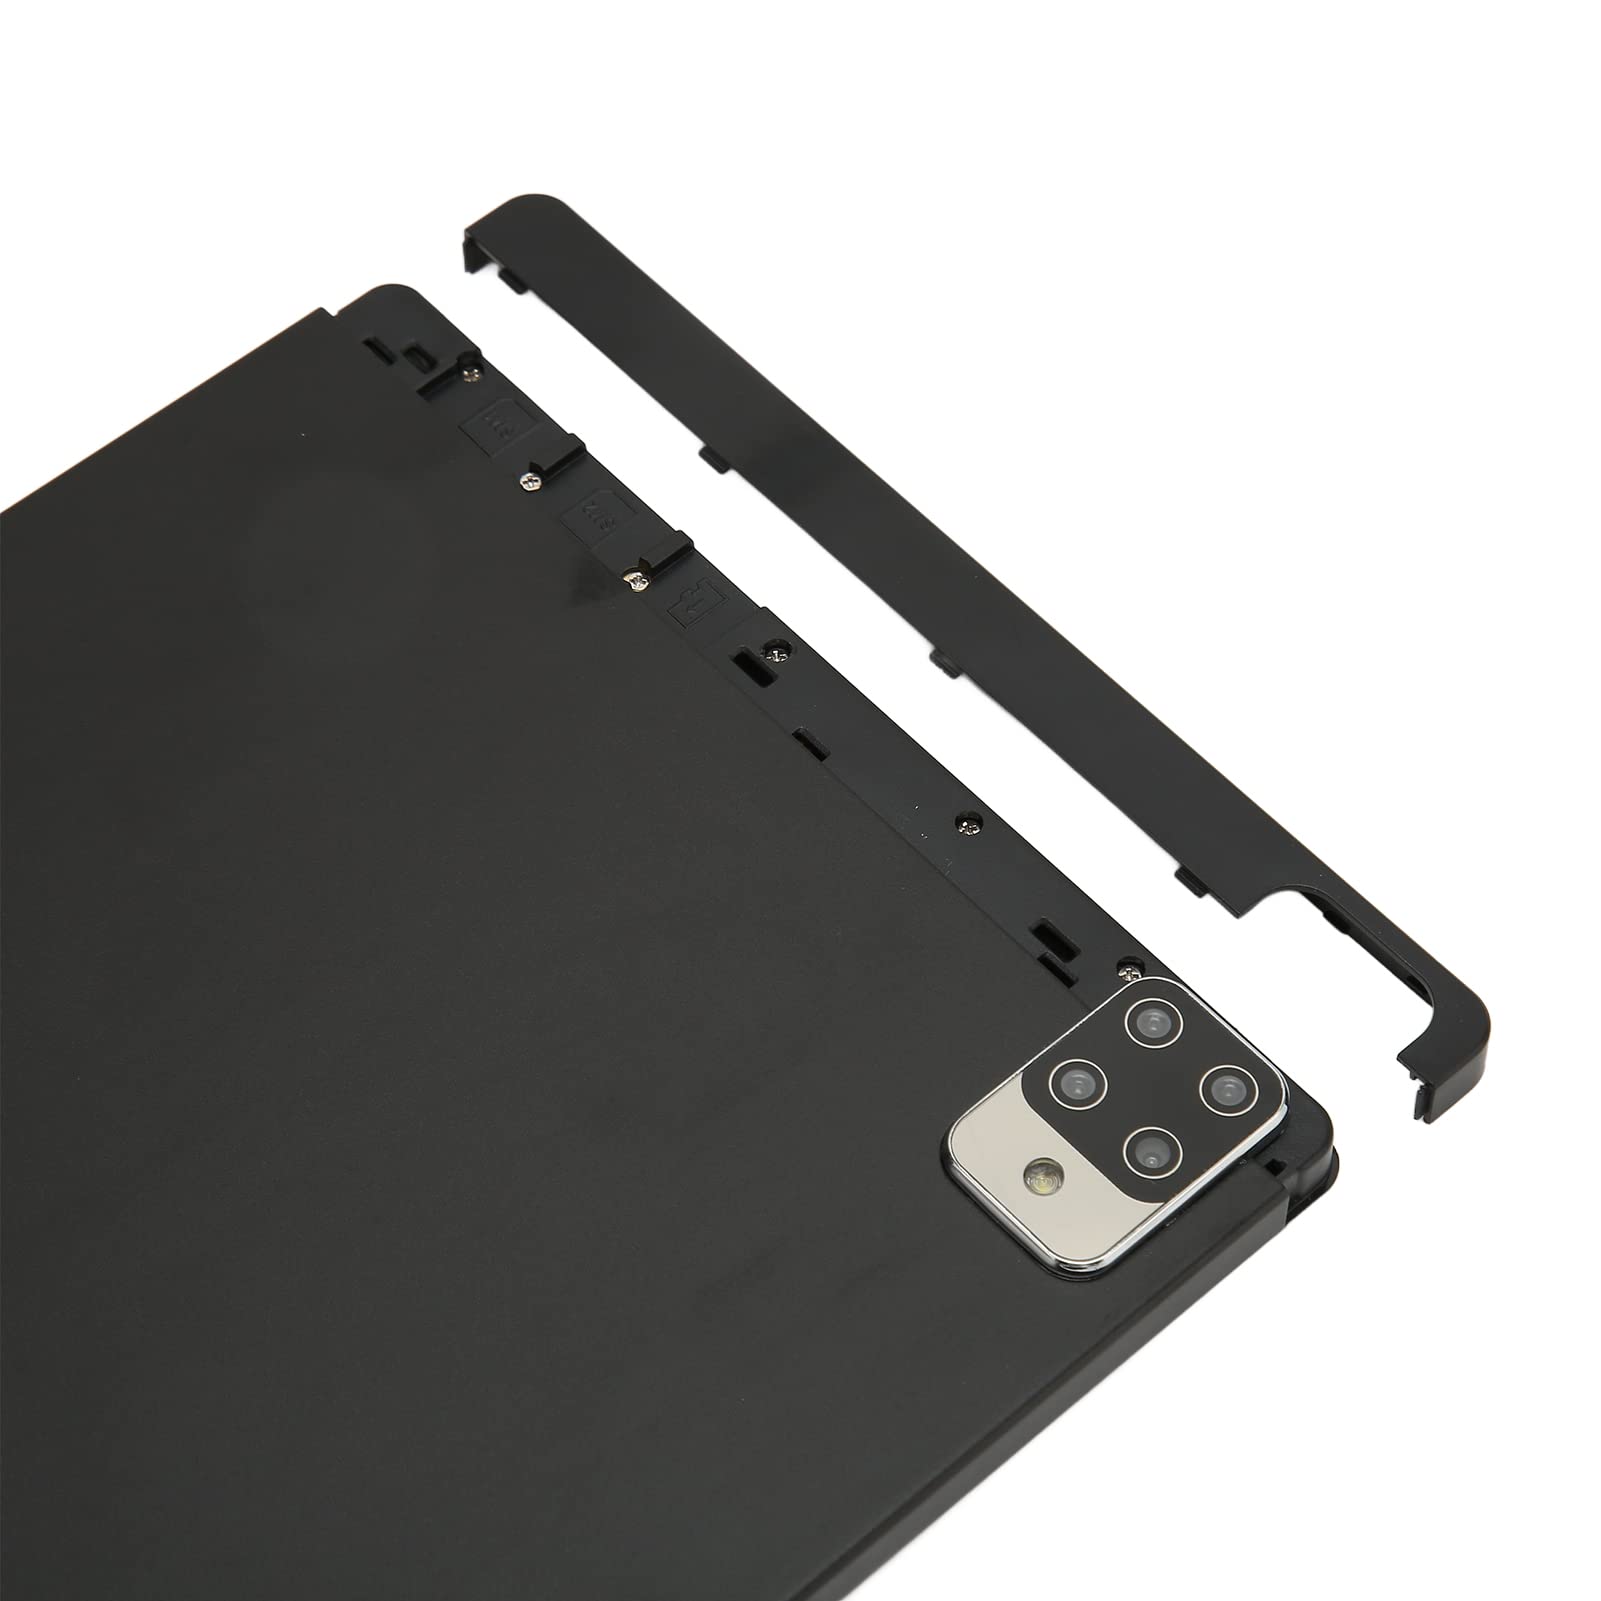 DAUZ 10.1 Inch Tablet, Portable Tablet 100-240V 1920x1080 IPS Display for Travel (US Plug)